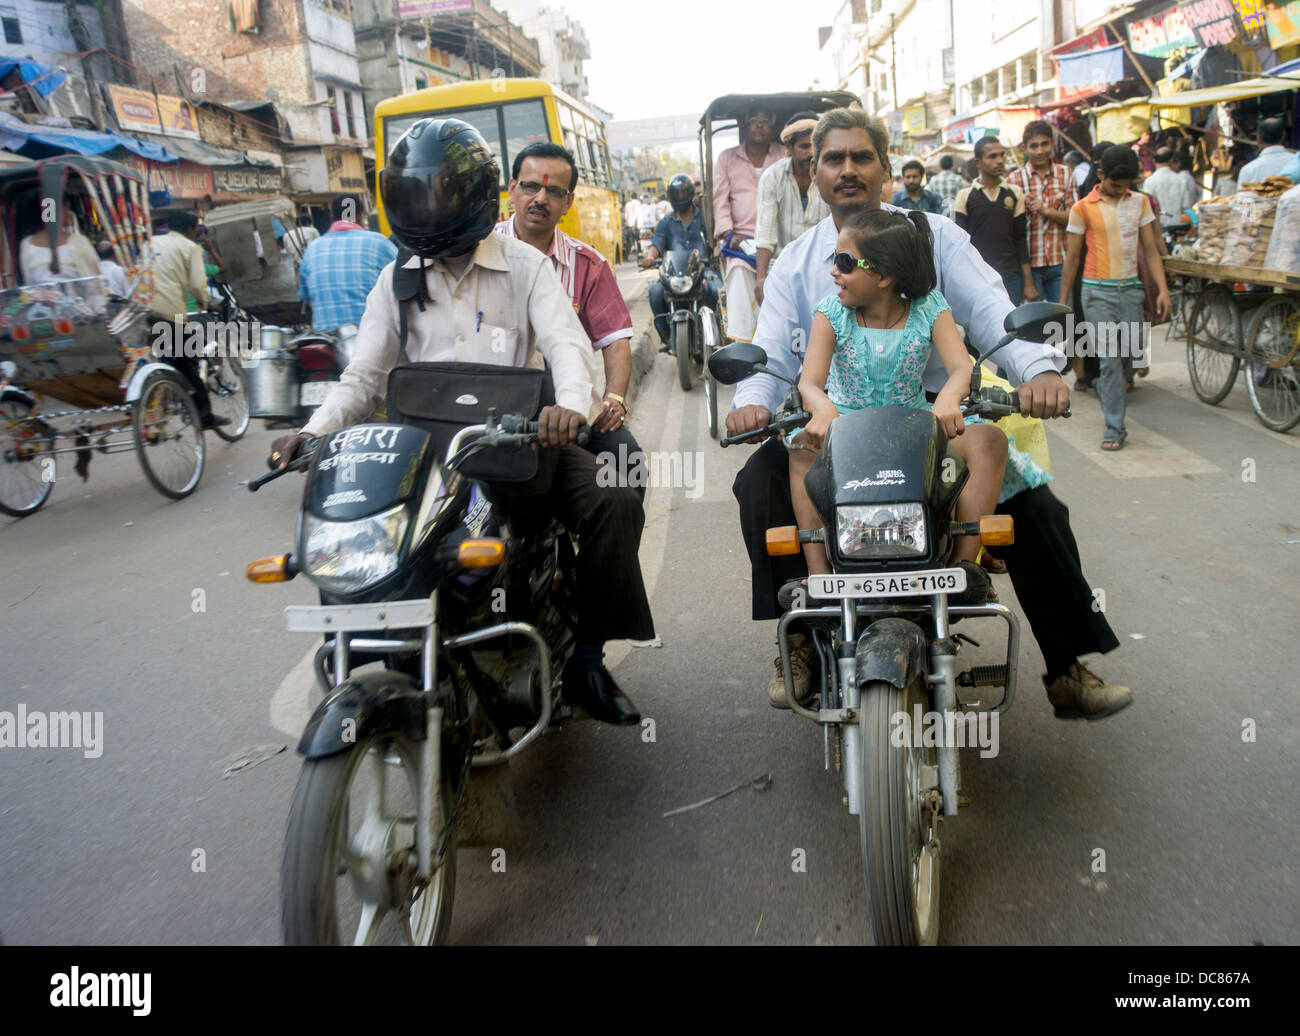 Road traffic on the streets of Varanasi India. Stock Photo